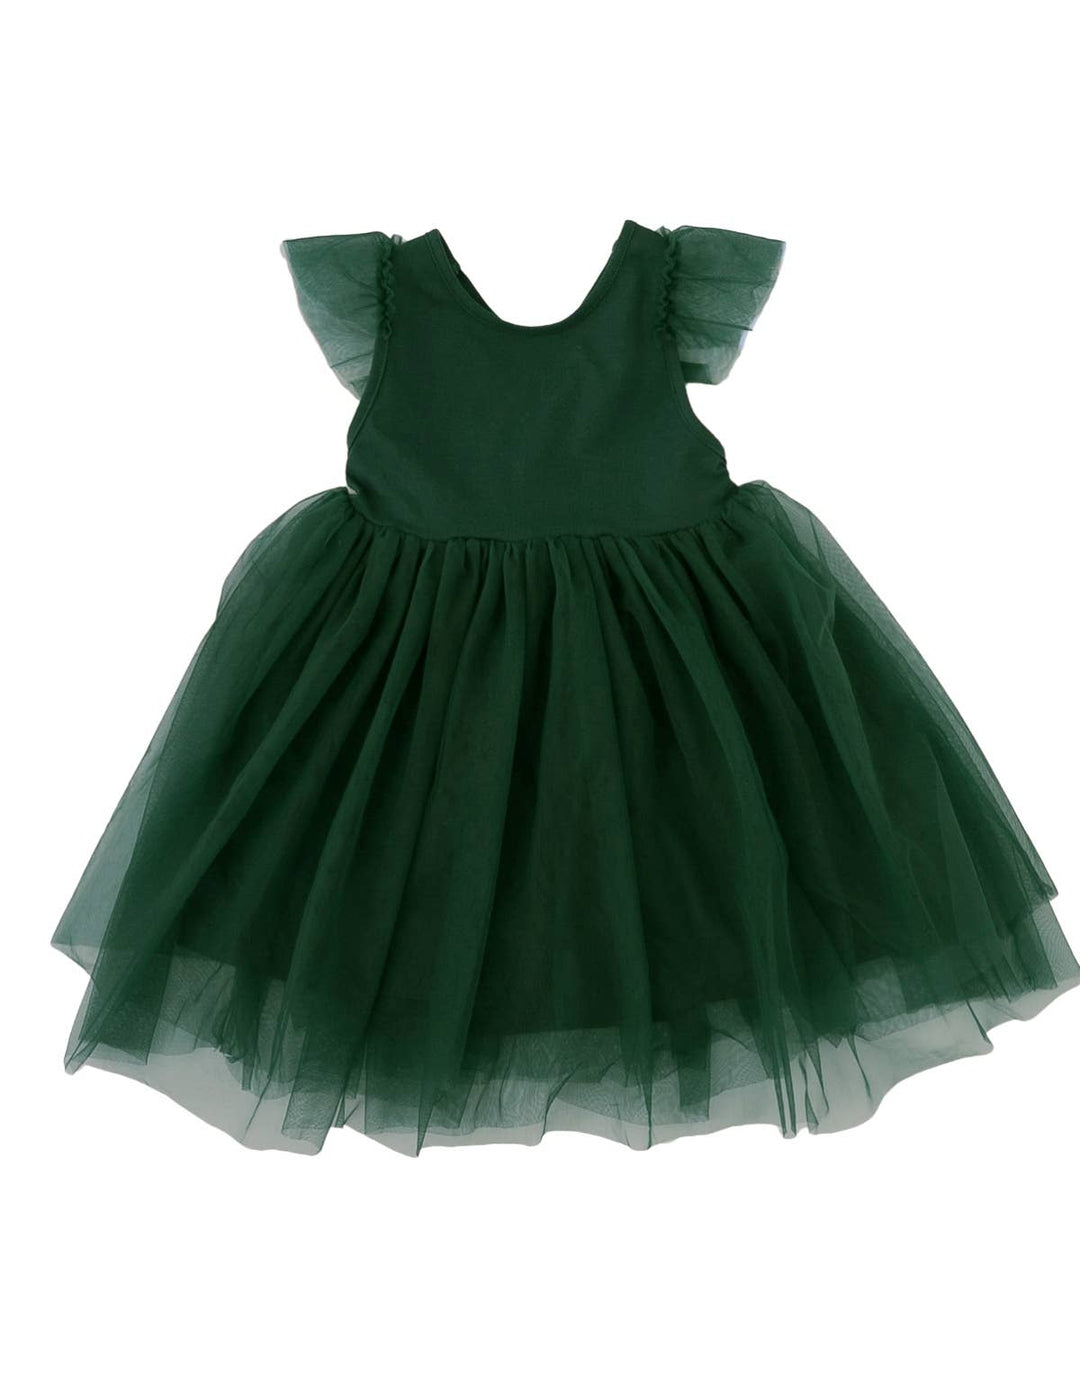 Scarlett Tutu Dress - Emerald Green